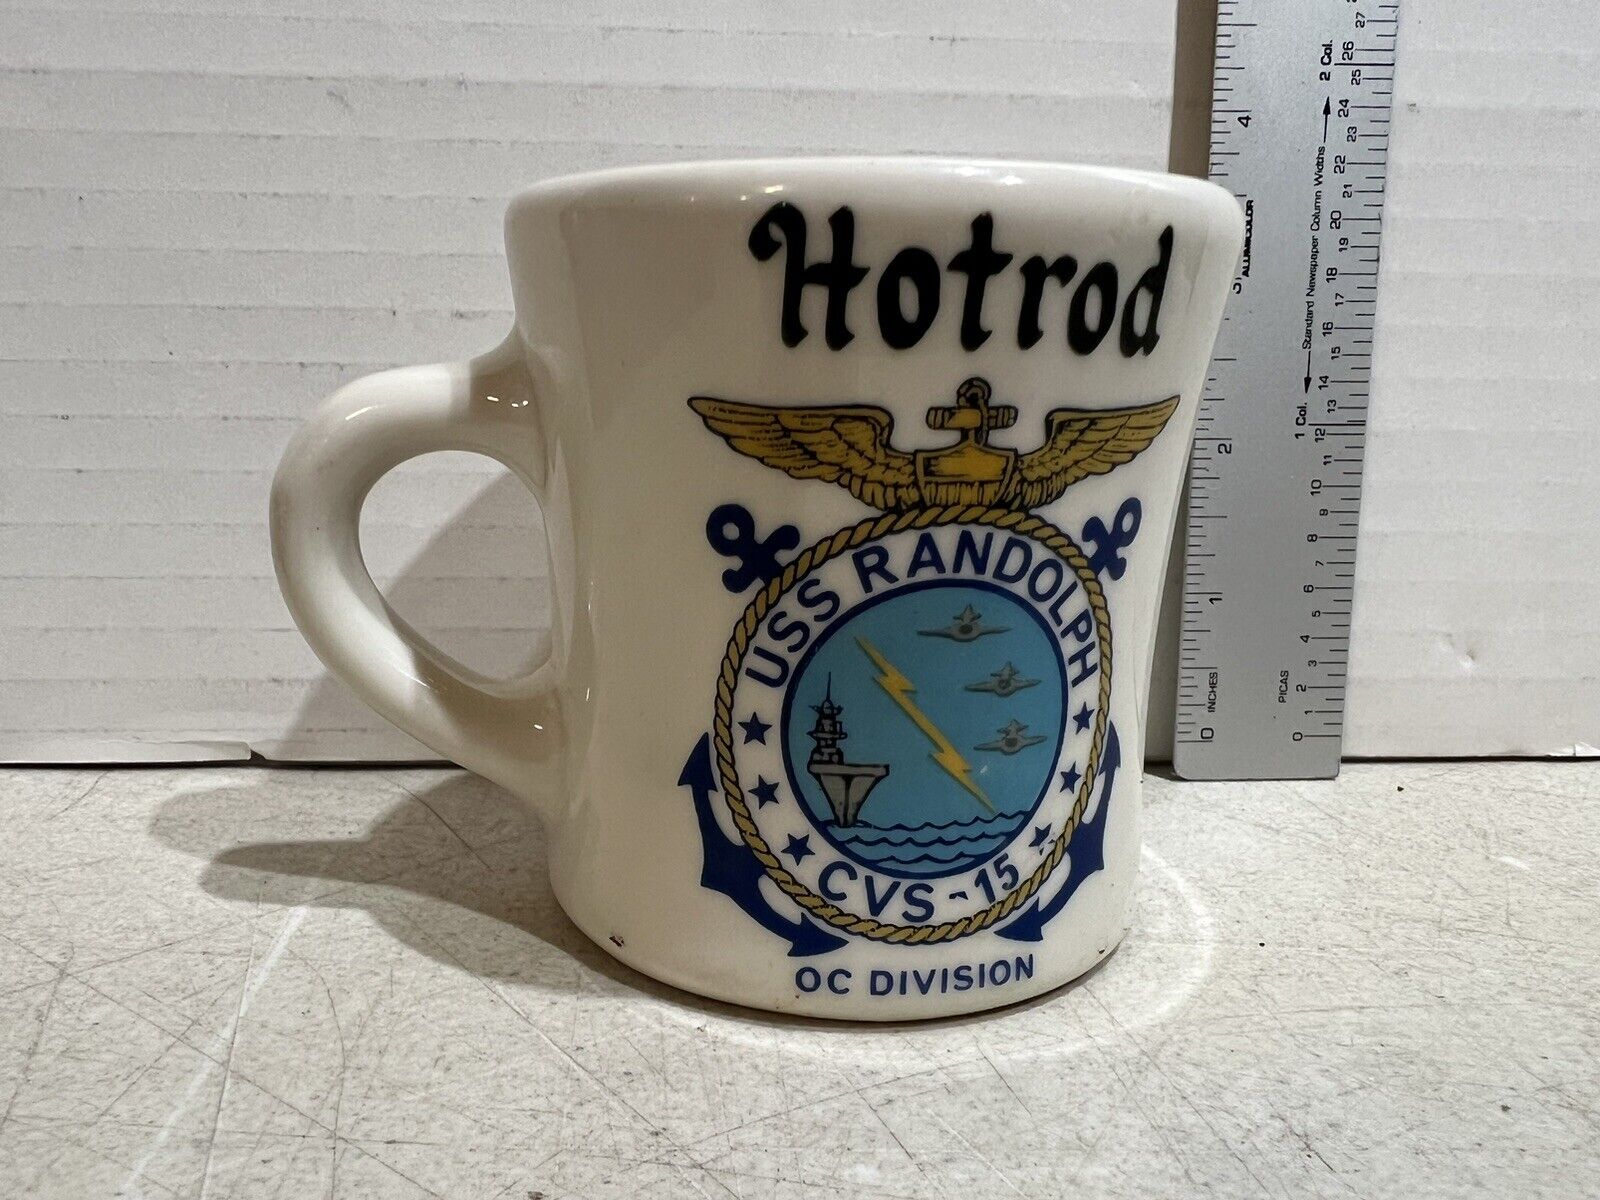 USS RANDOLPH CVS-15 Aircraft Carrier Ship\'s Crest Coffee Cup Victor Hotrod